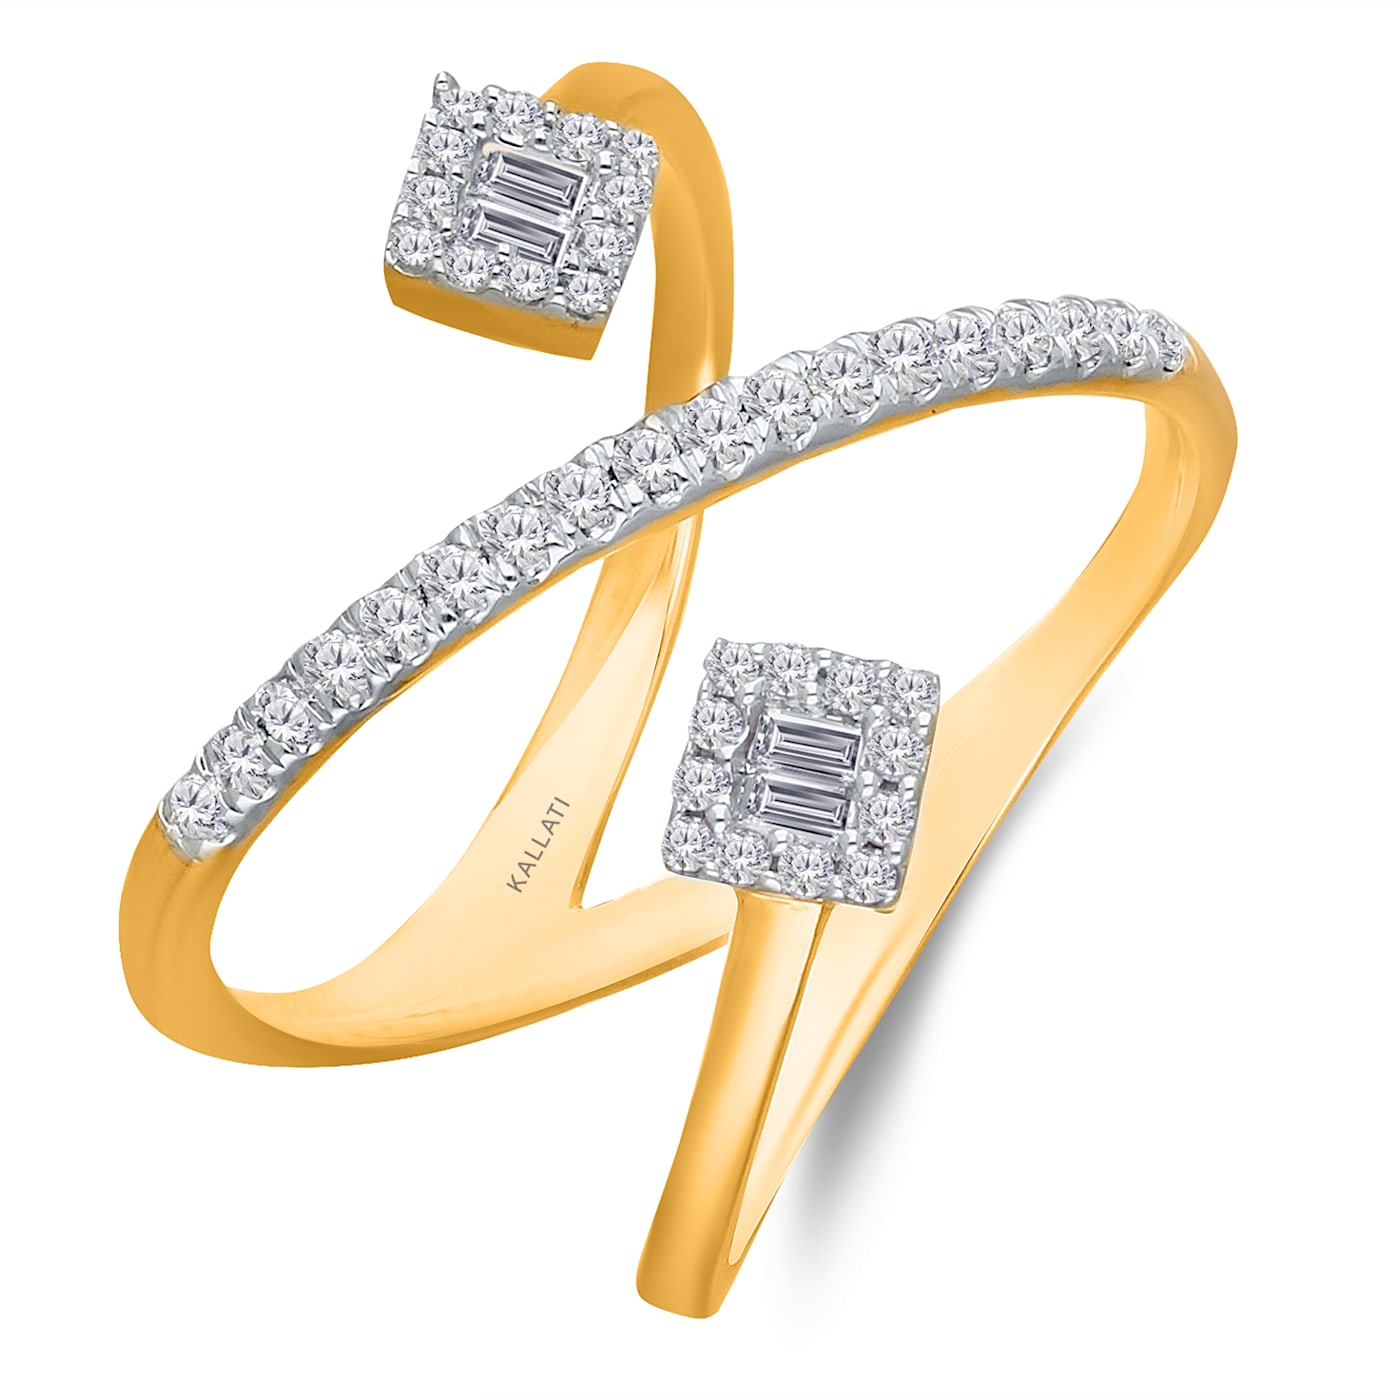 Rings Priced 10,000 - 20,000 | PC Jeweller